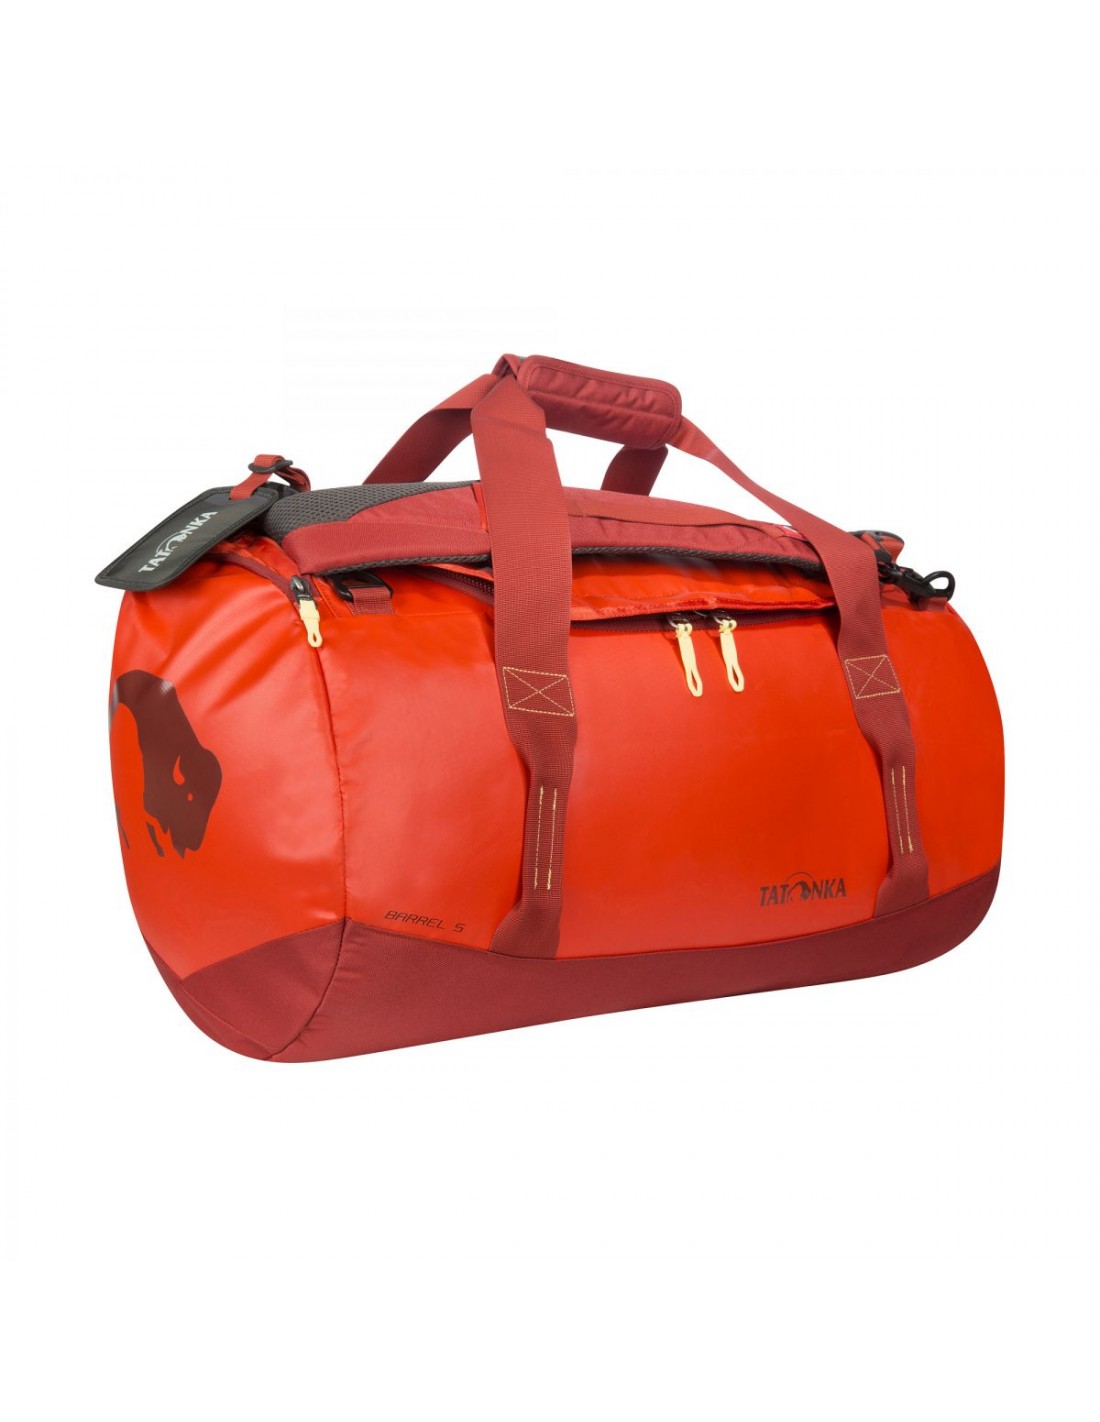 Tatonka Reisetasche 45 S, Barrel S, red orange Taschenfarbe - Rot, von Tatonka